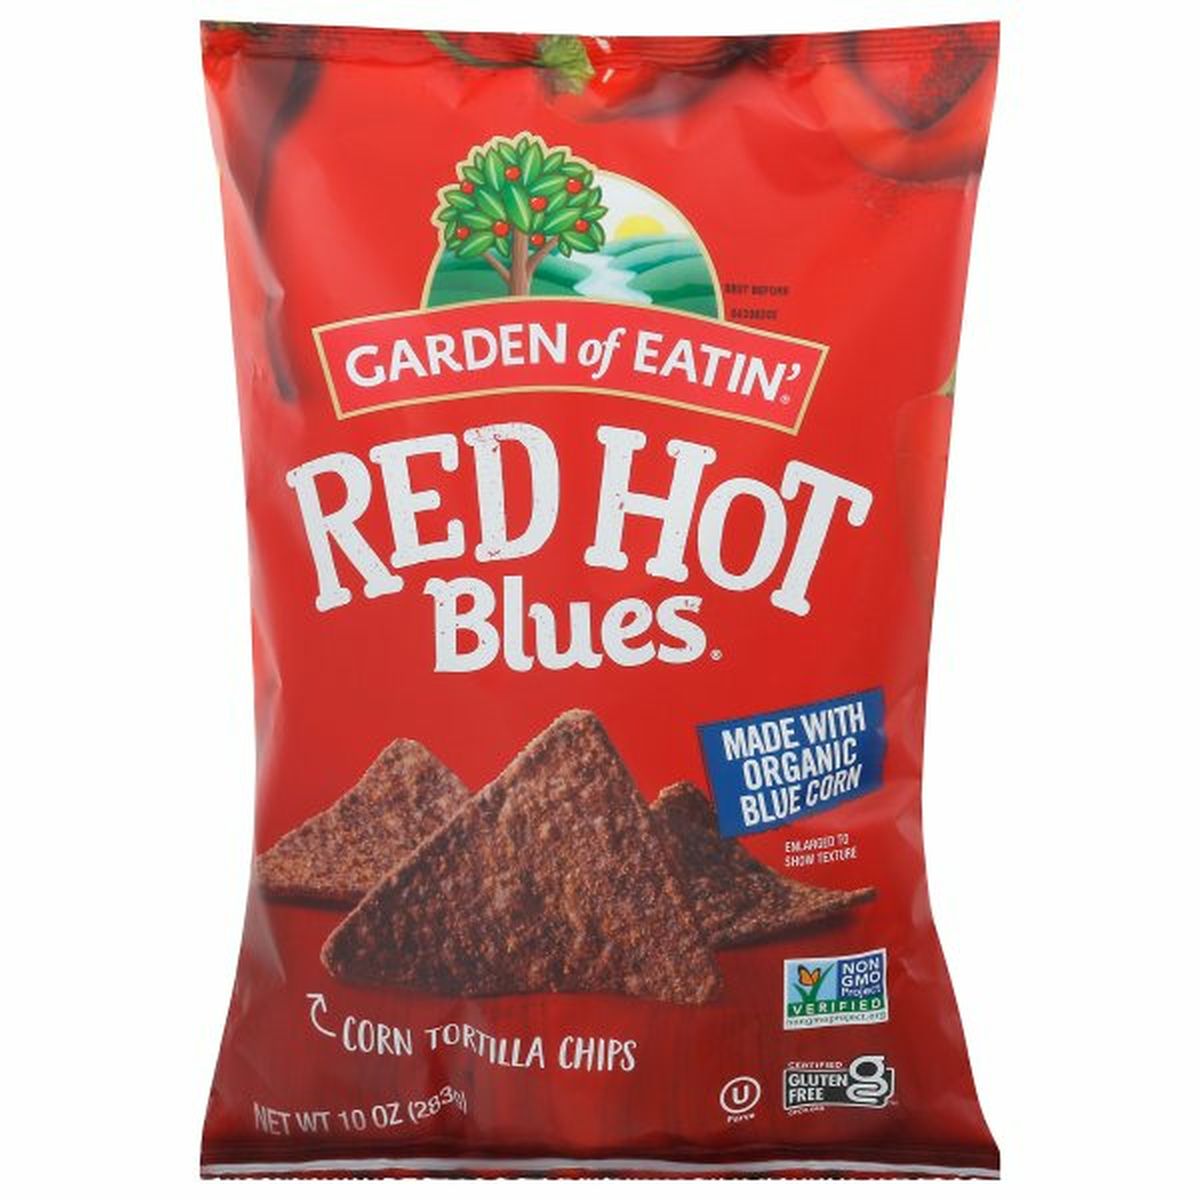 Calories in Garden of Eatin' Corn Tortilla Chips, Red Hot Blues